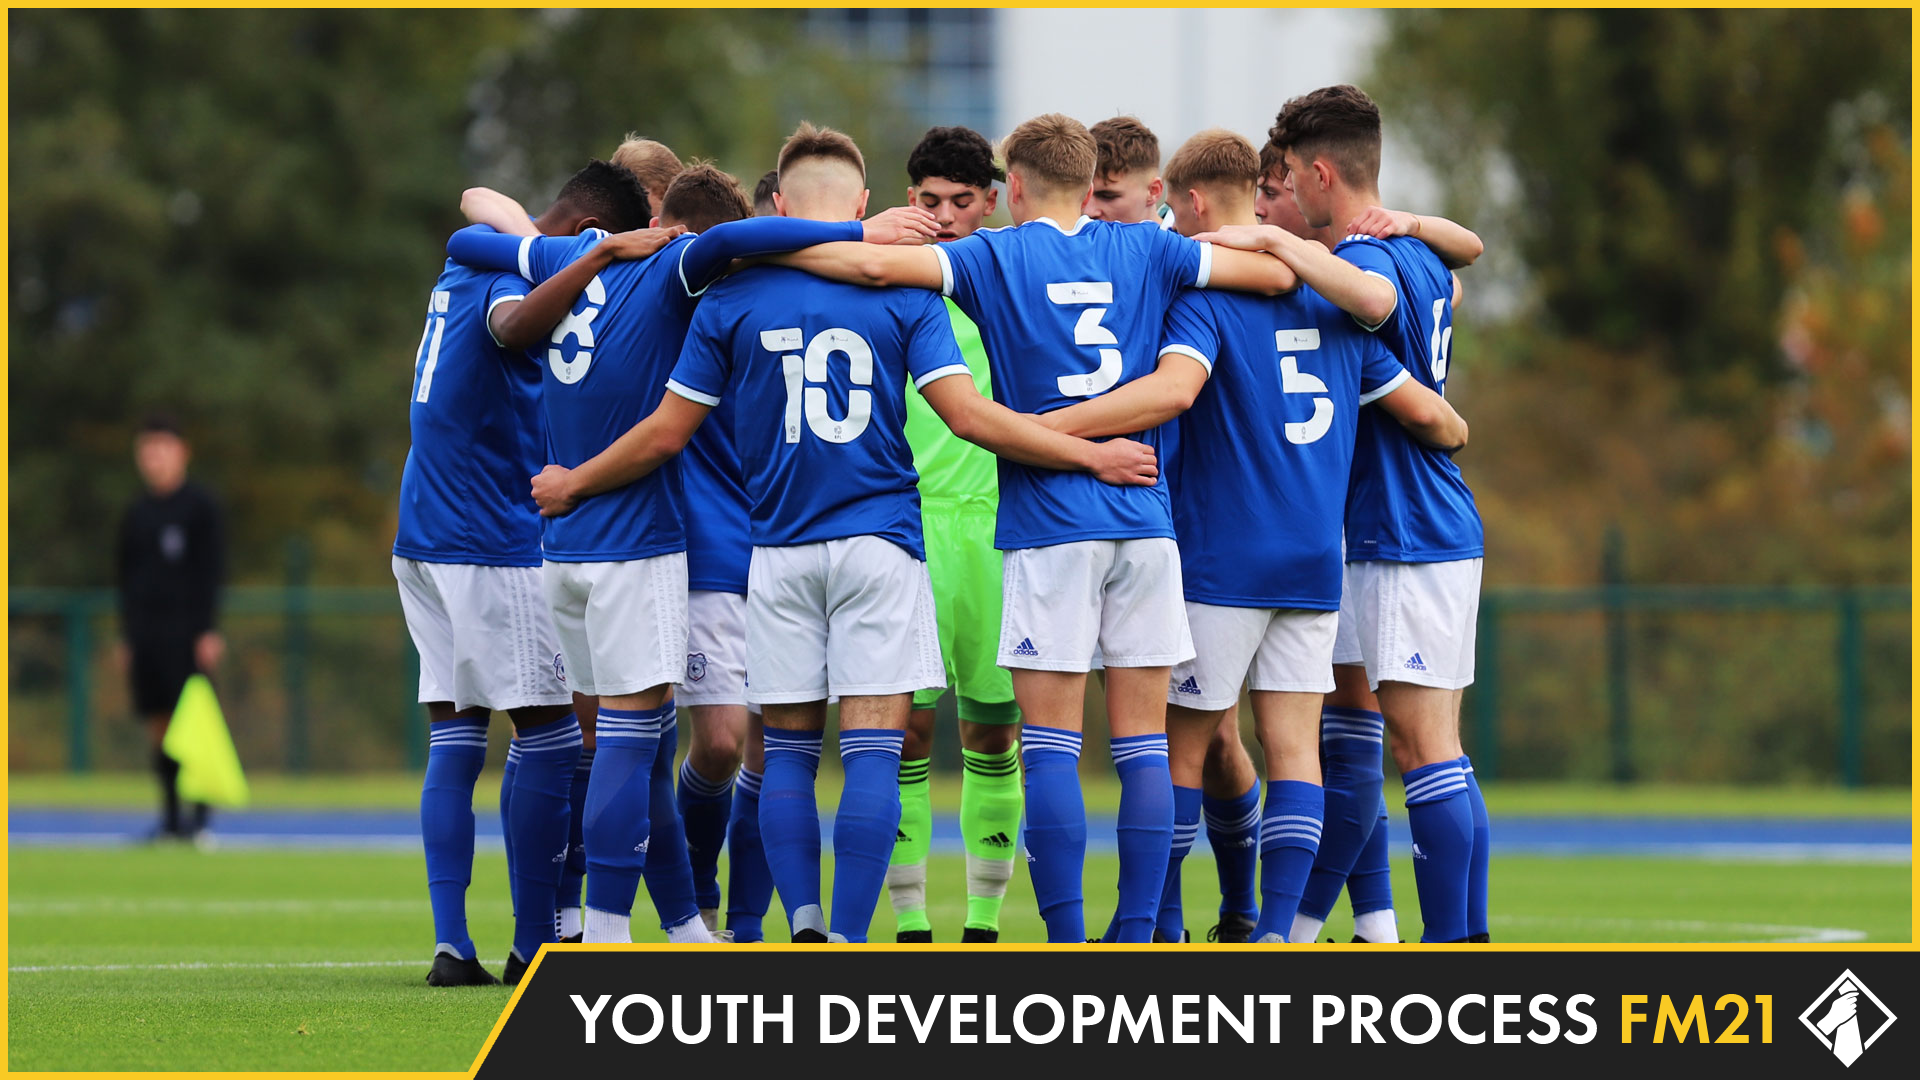 FM21: The Youth Development Process